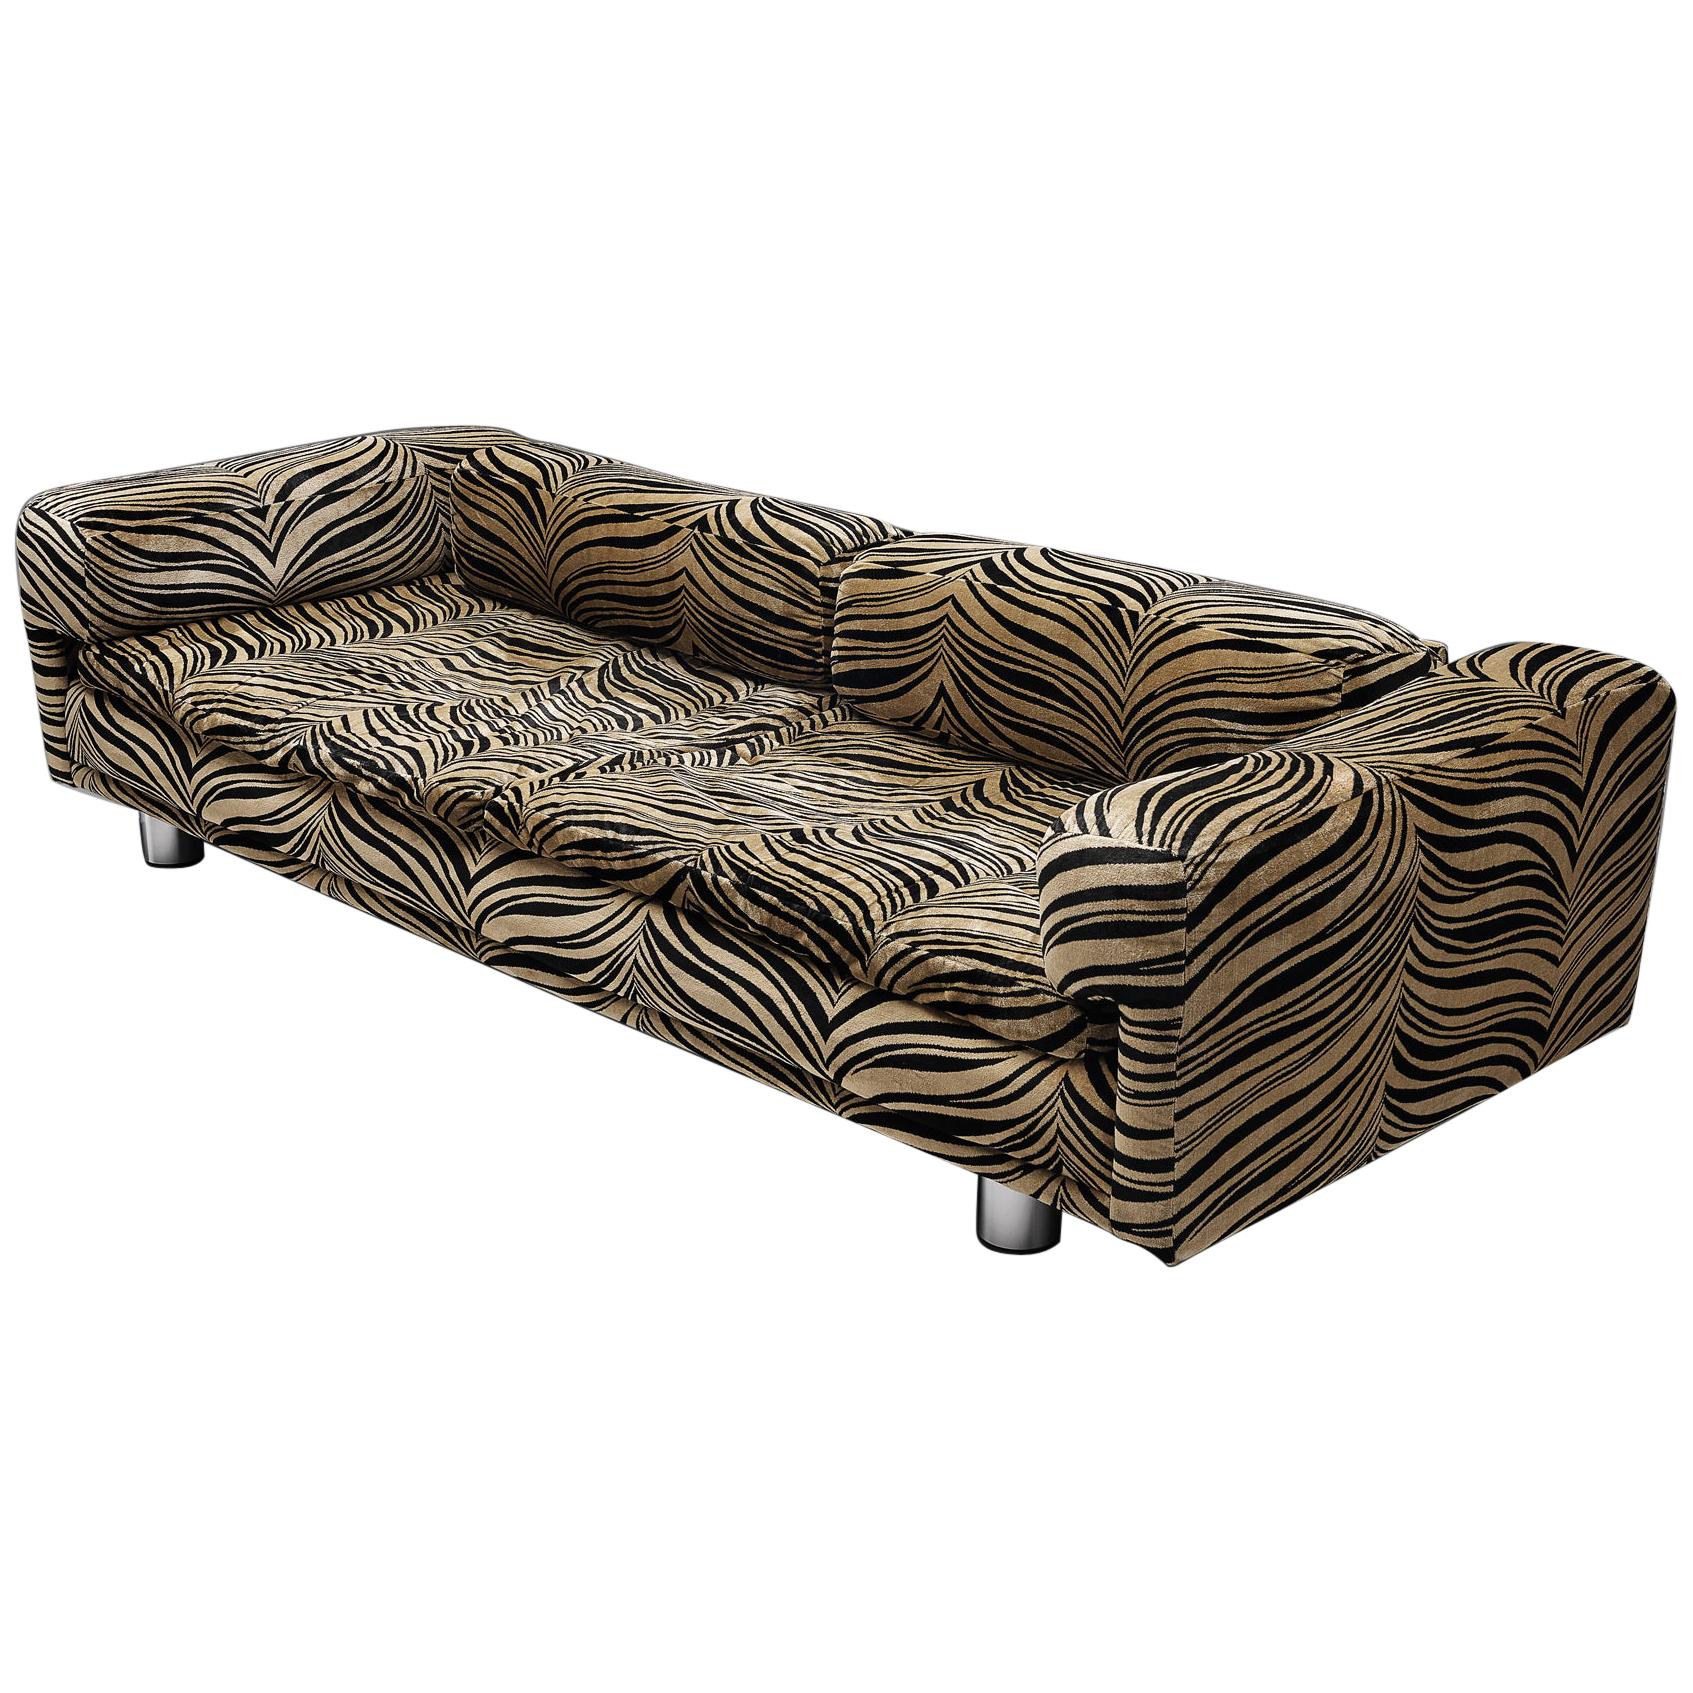 Howard Keith Grand 'Diplomat' Sofa in Zebra Patterned Upholstery